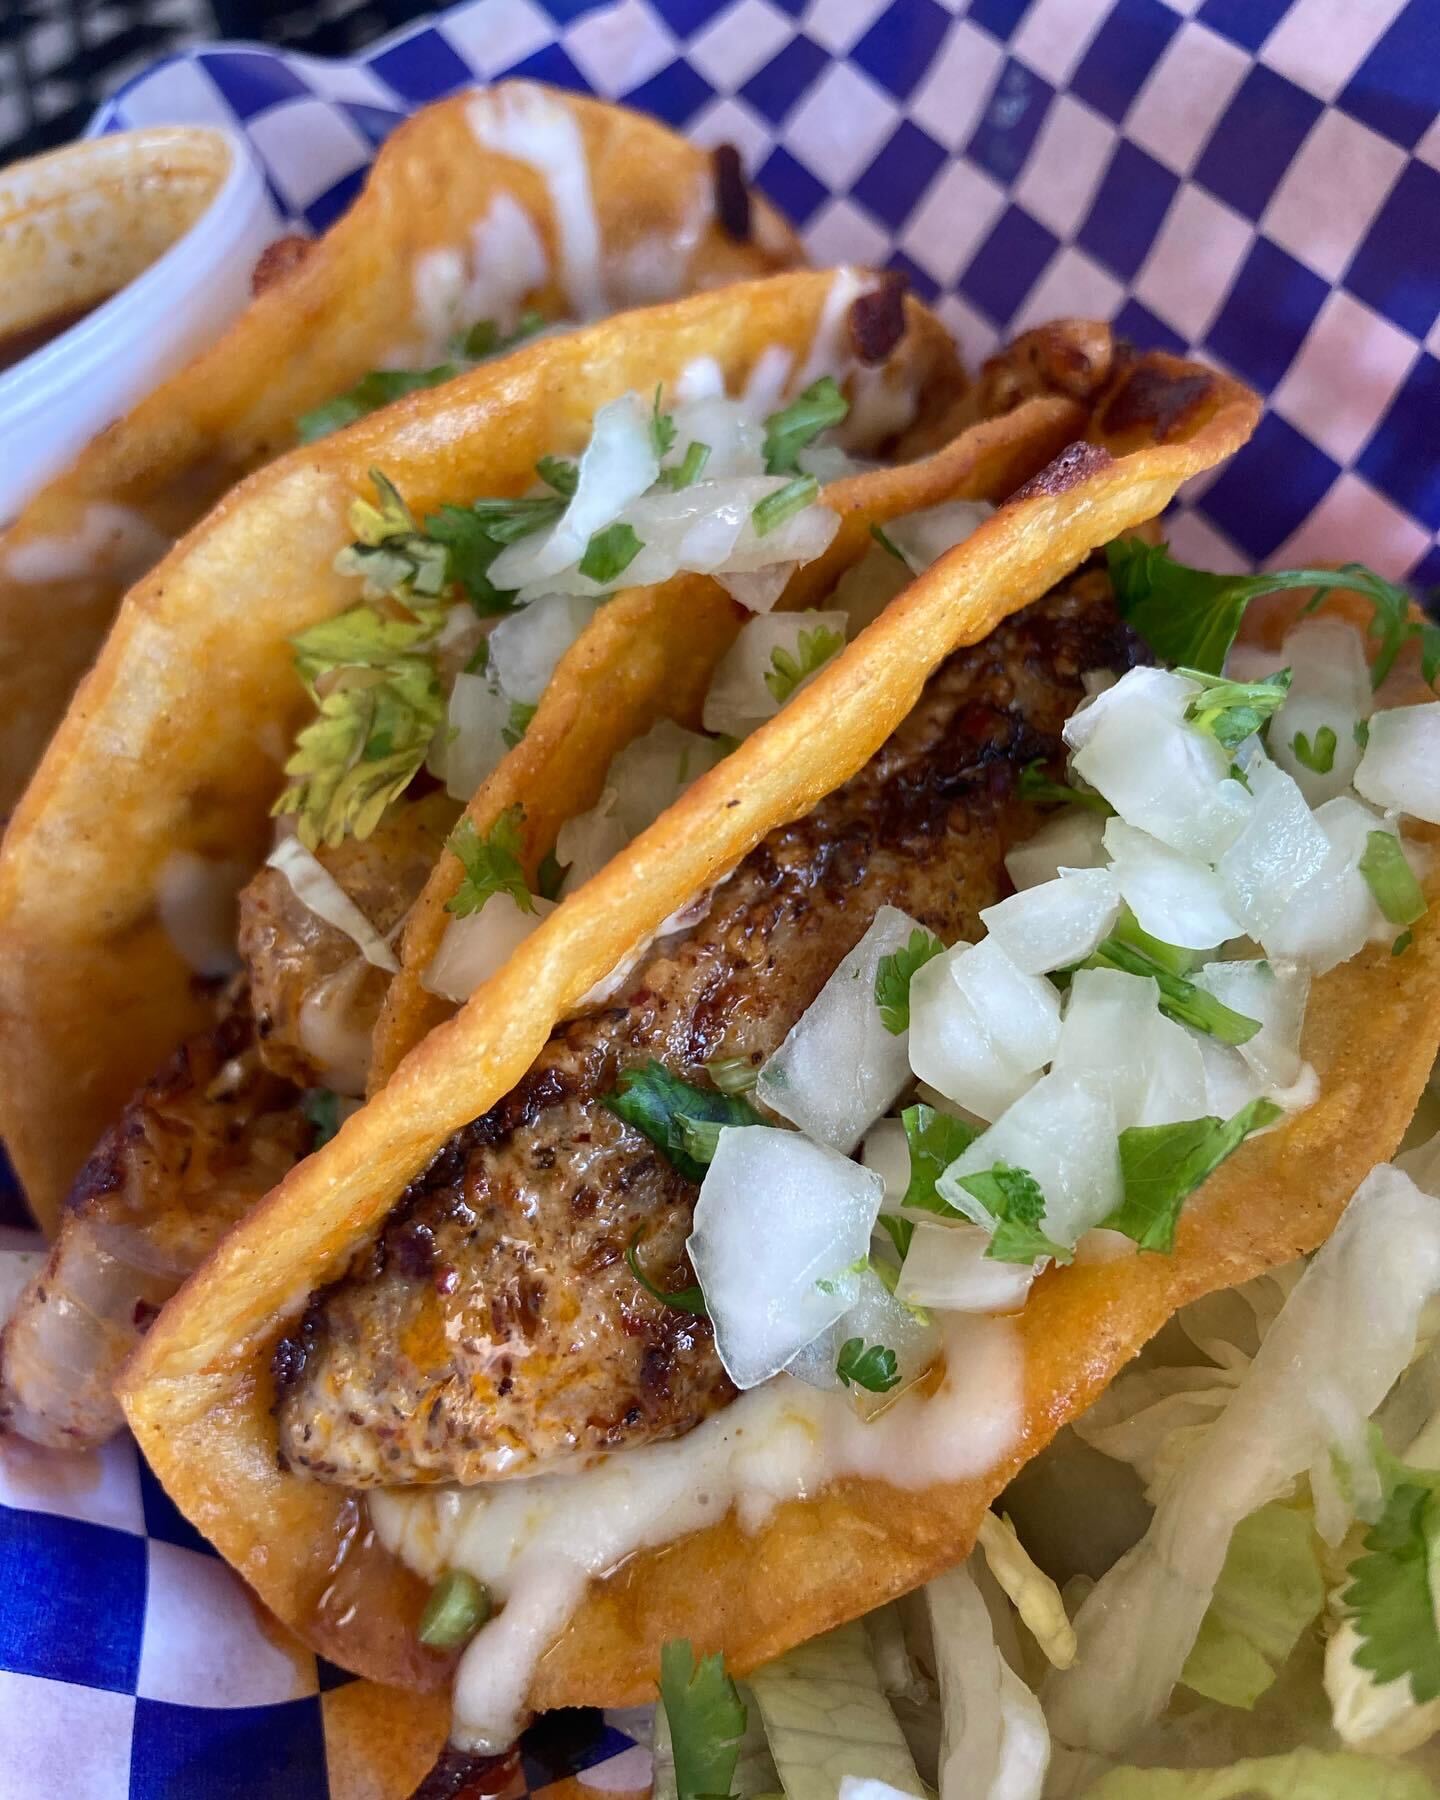 Mahi-mahi quesabirria tacos at El Taco Rustico (Photo by Shane Reiser)